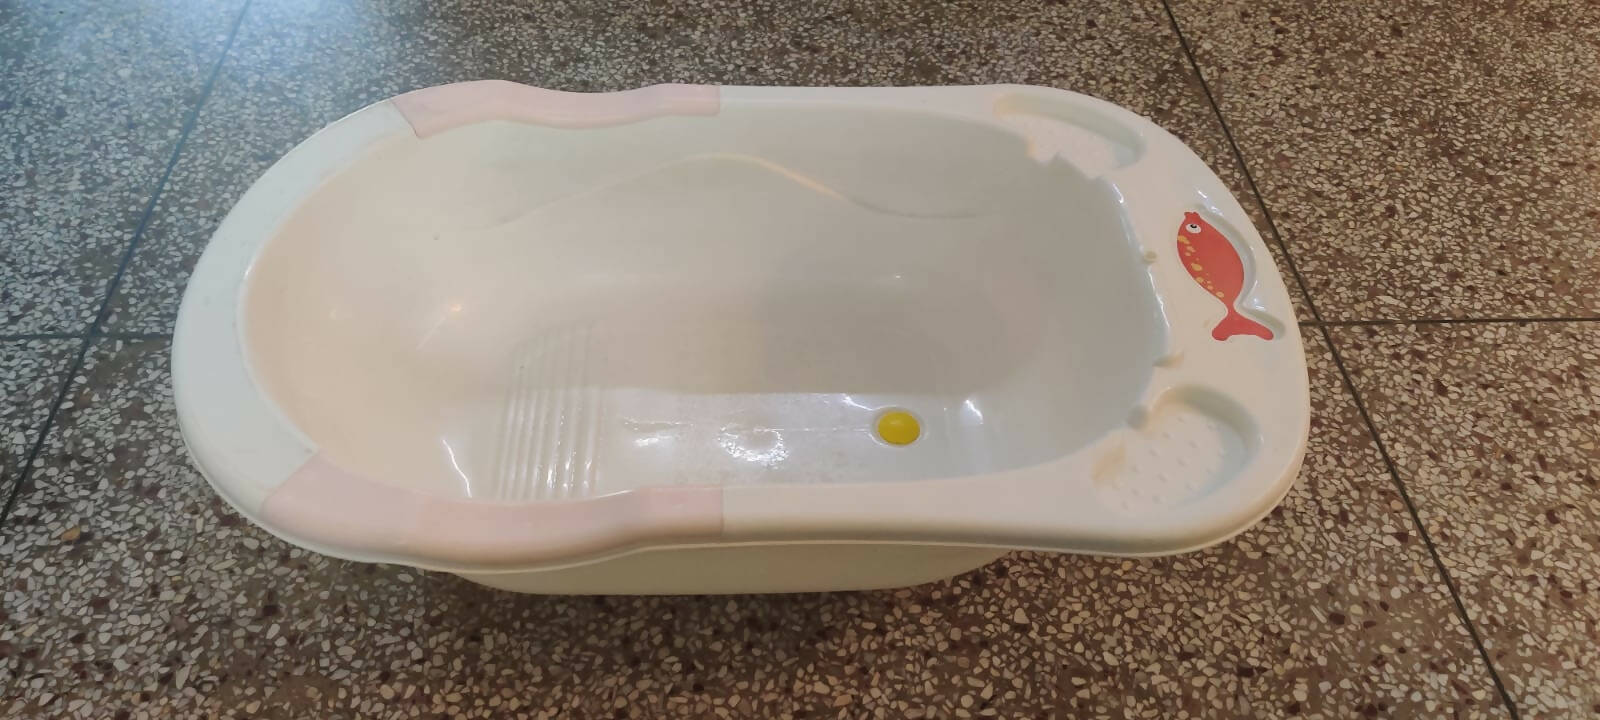 LUVLAP Baby Bath Tub